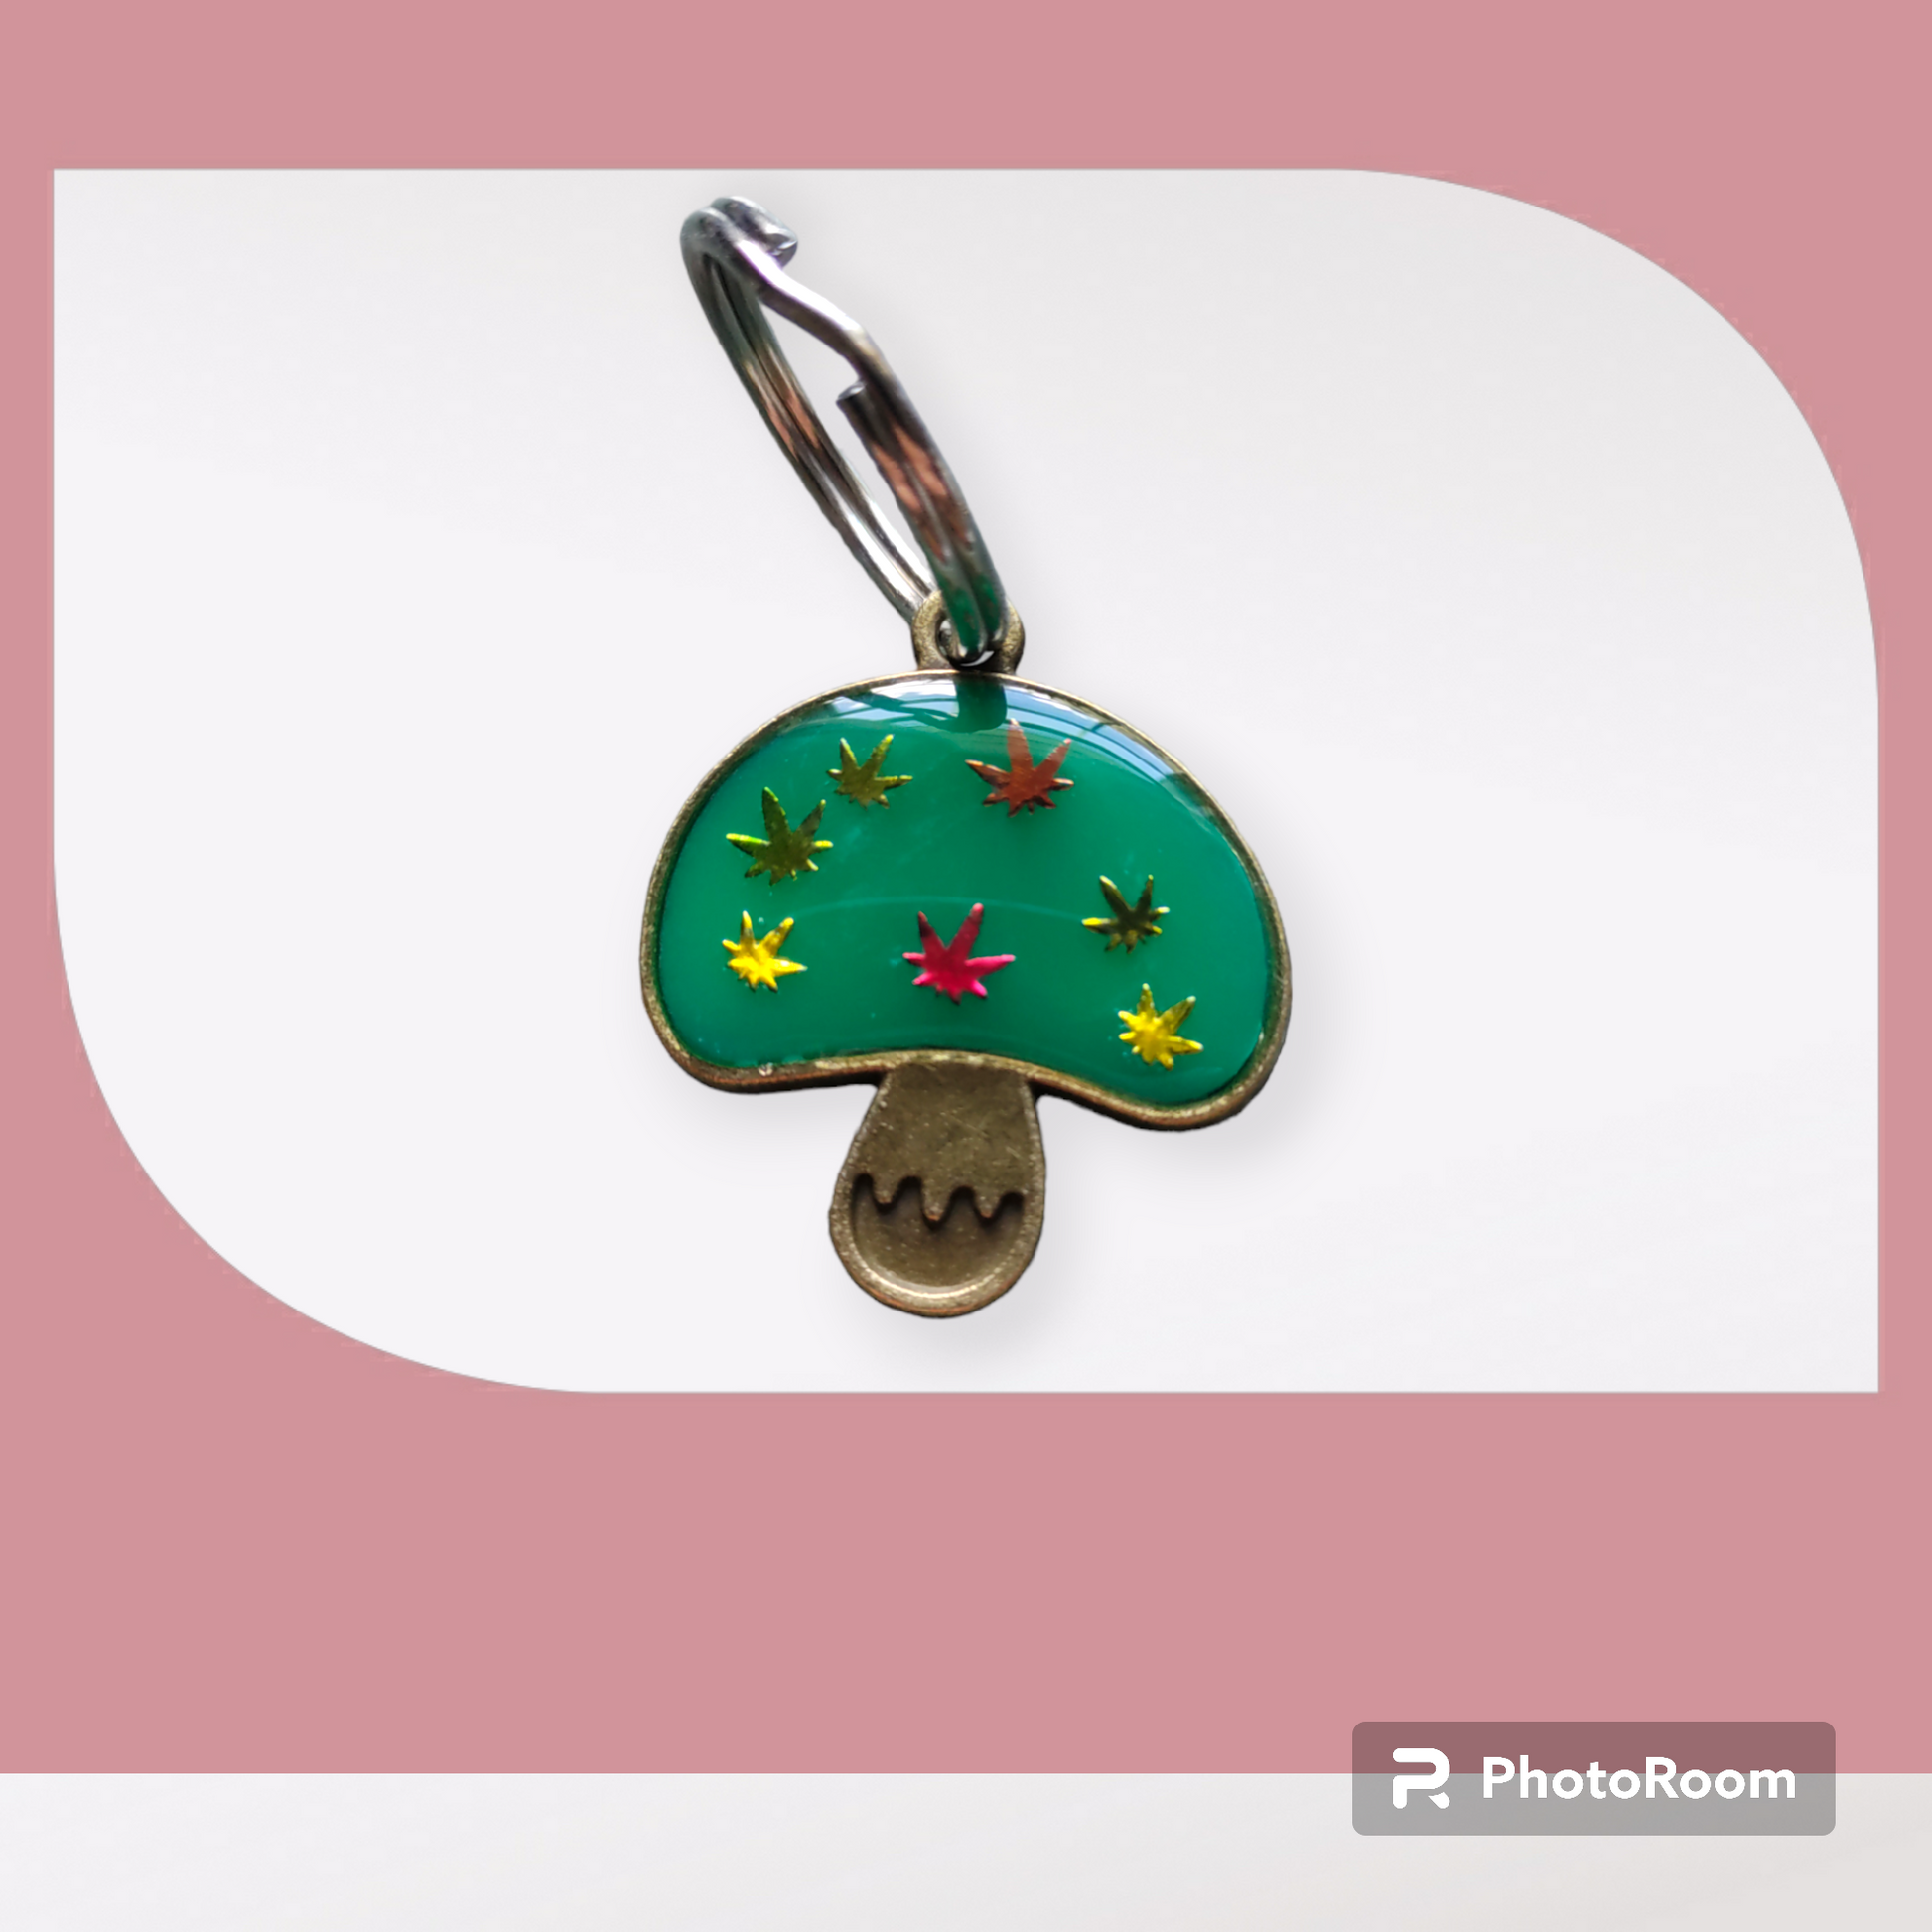 Ms. Mary Jane Mushroom Key Chains keychain from Karma Goodness Designs